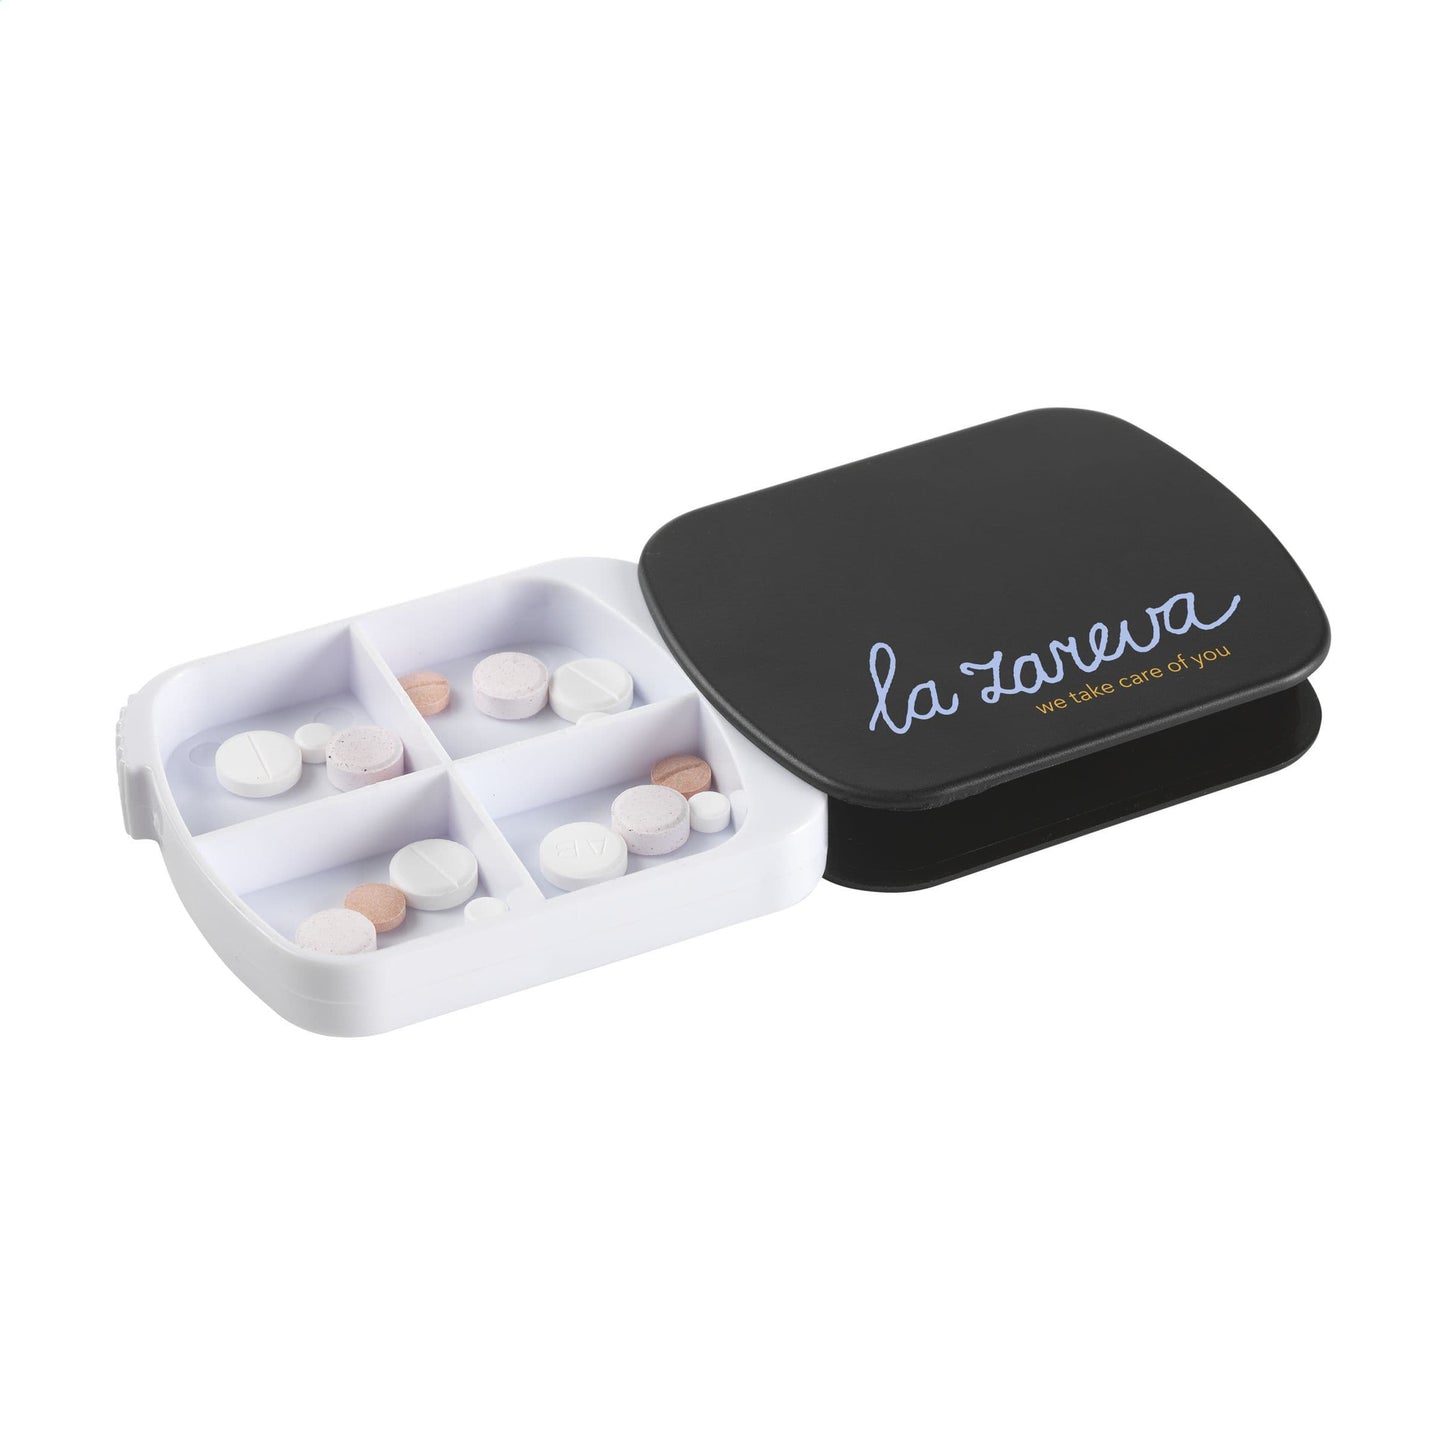 5 Stück-Medicin Box Tablettendose - WERBE-WELT.SHOP